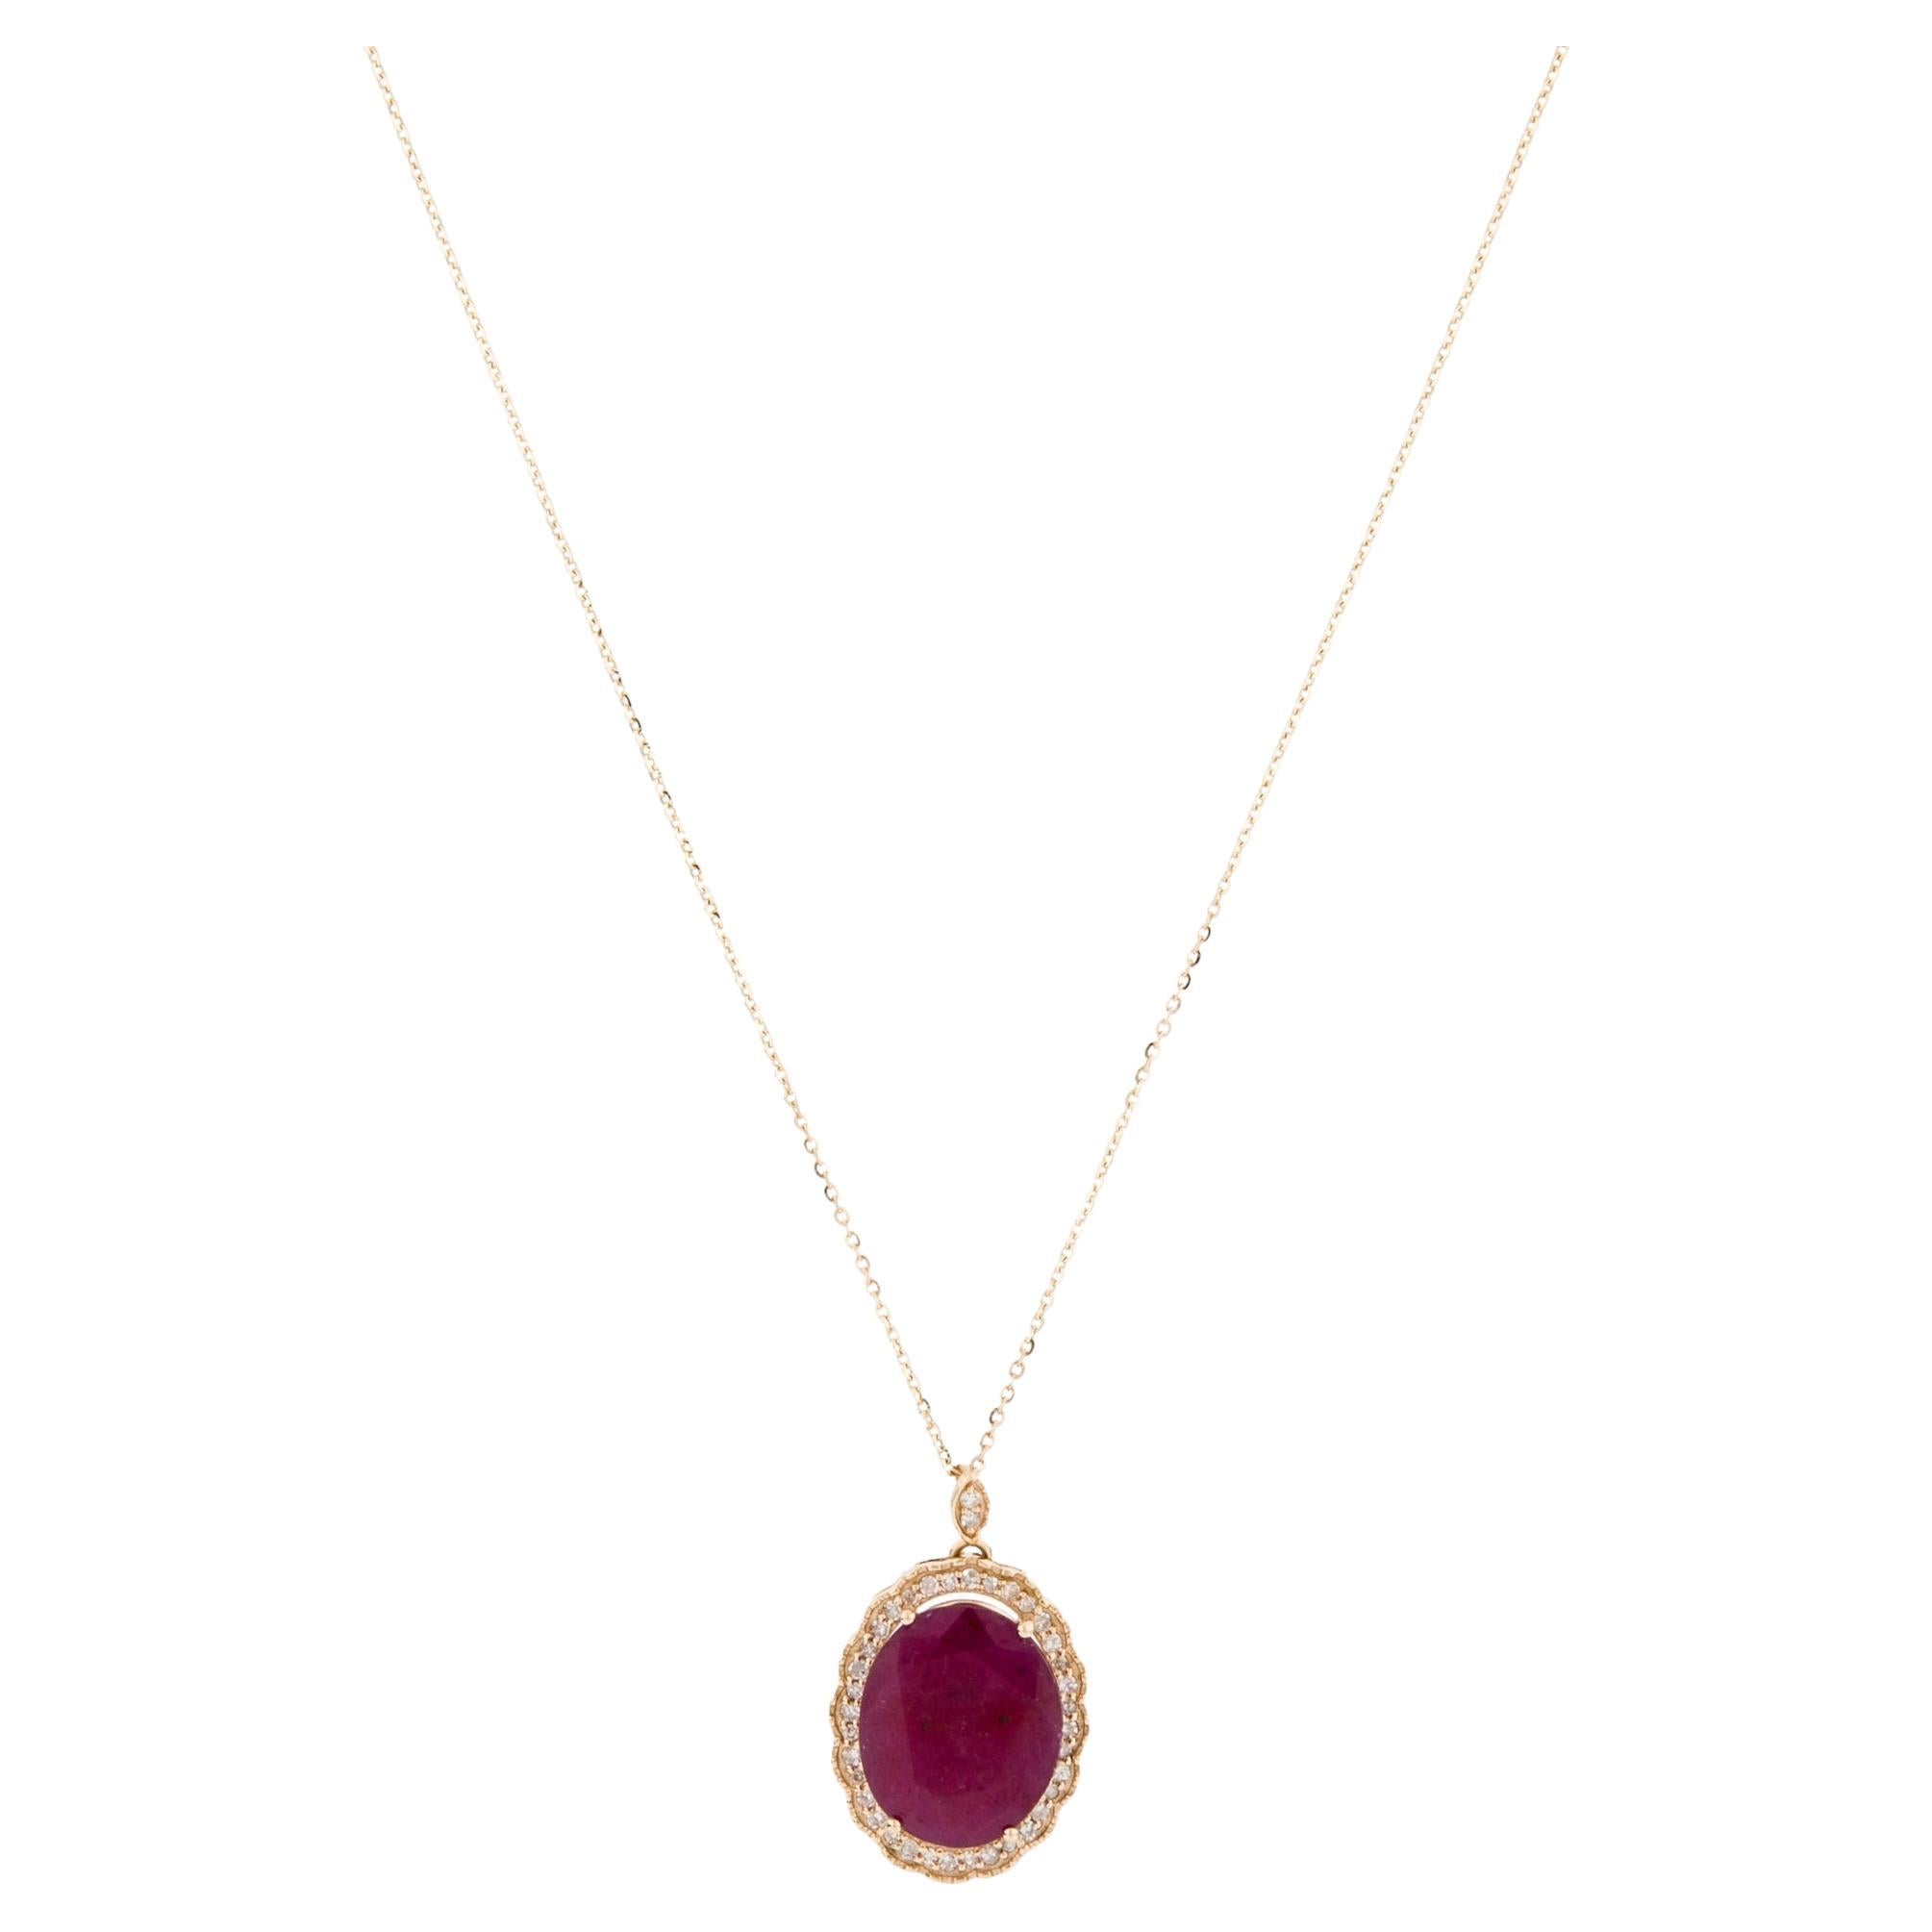 14K 3.79ct Ruby & Diamond Pendant Necklace: Exquisite Luxury Statement Jewelry